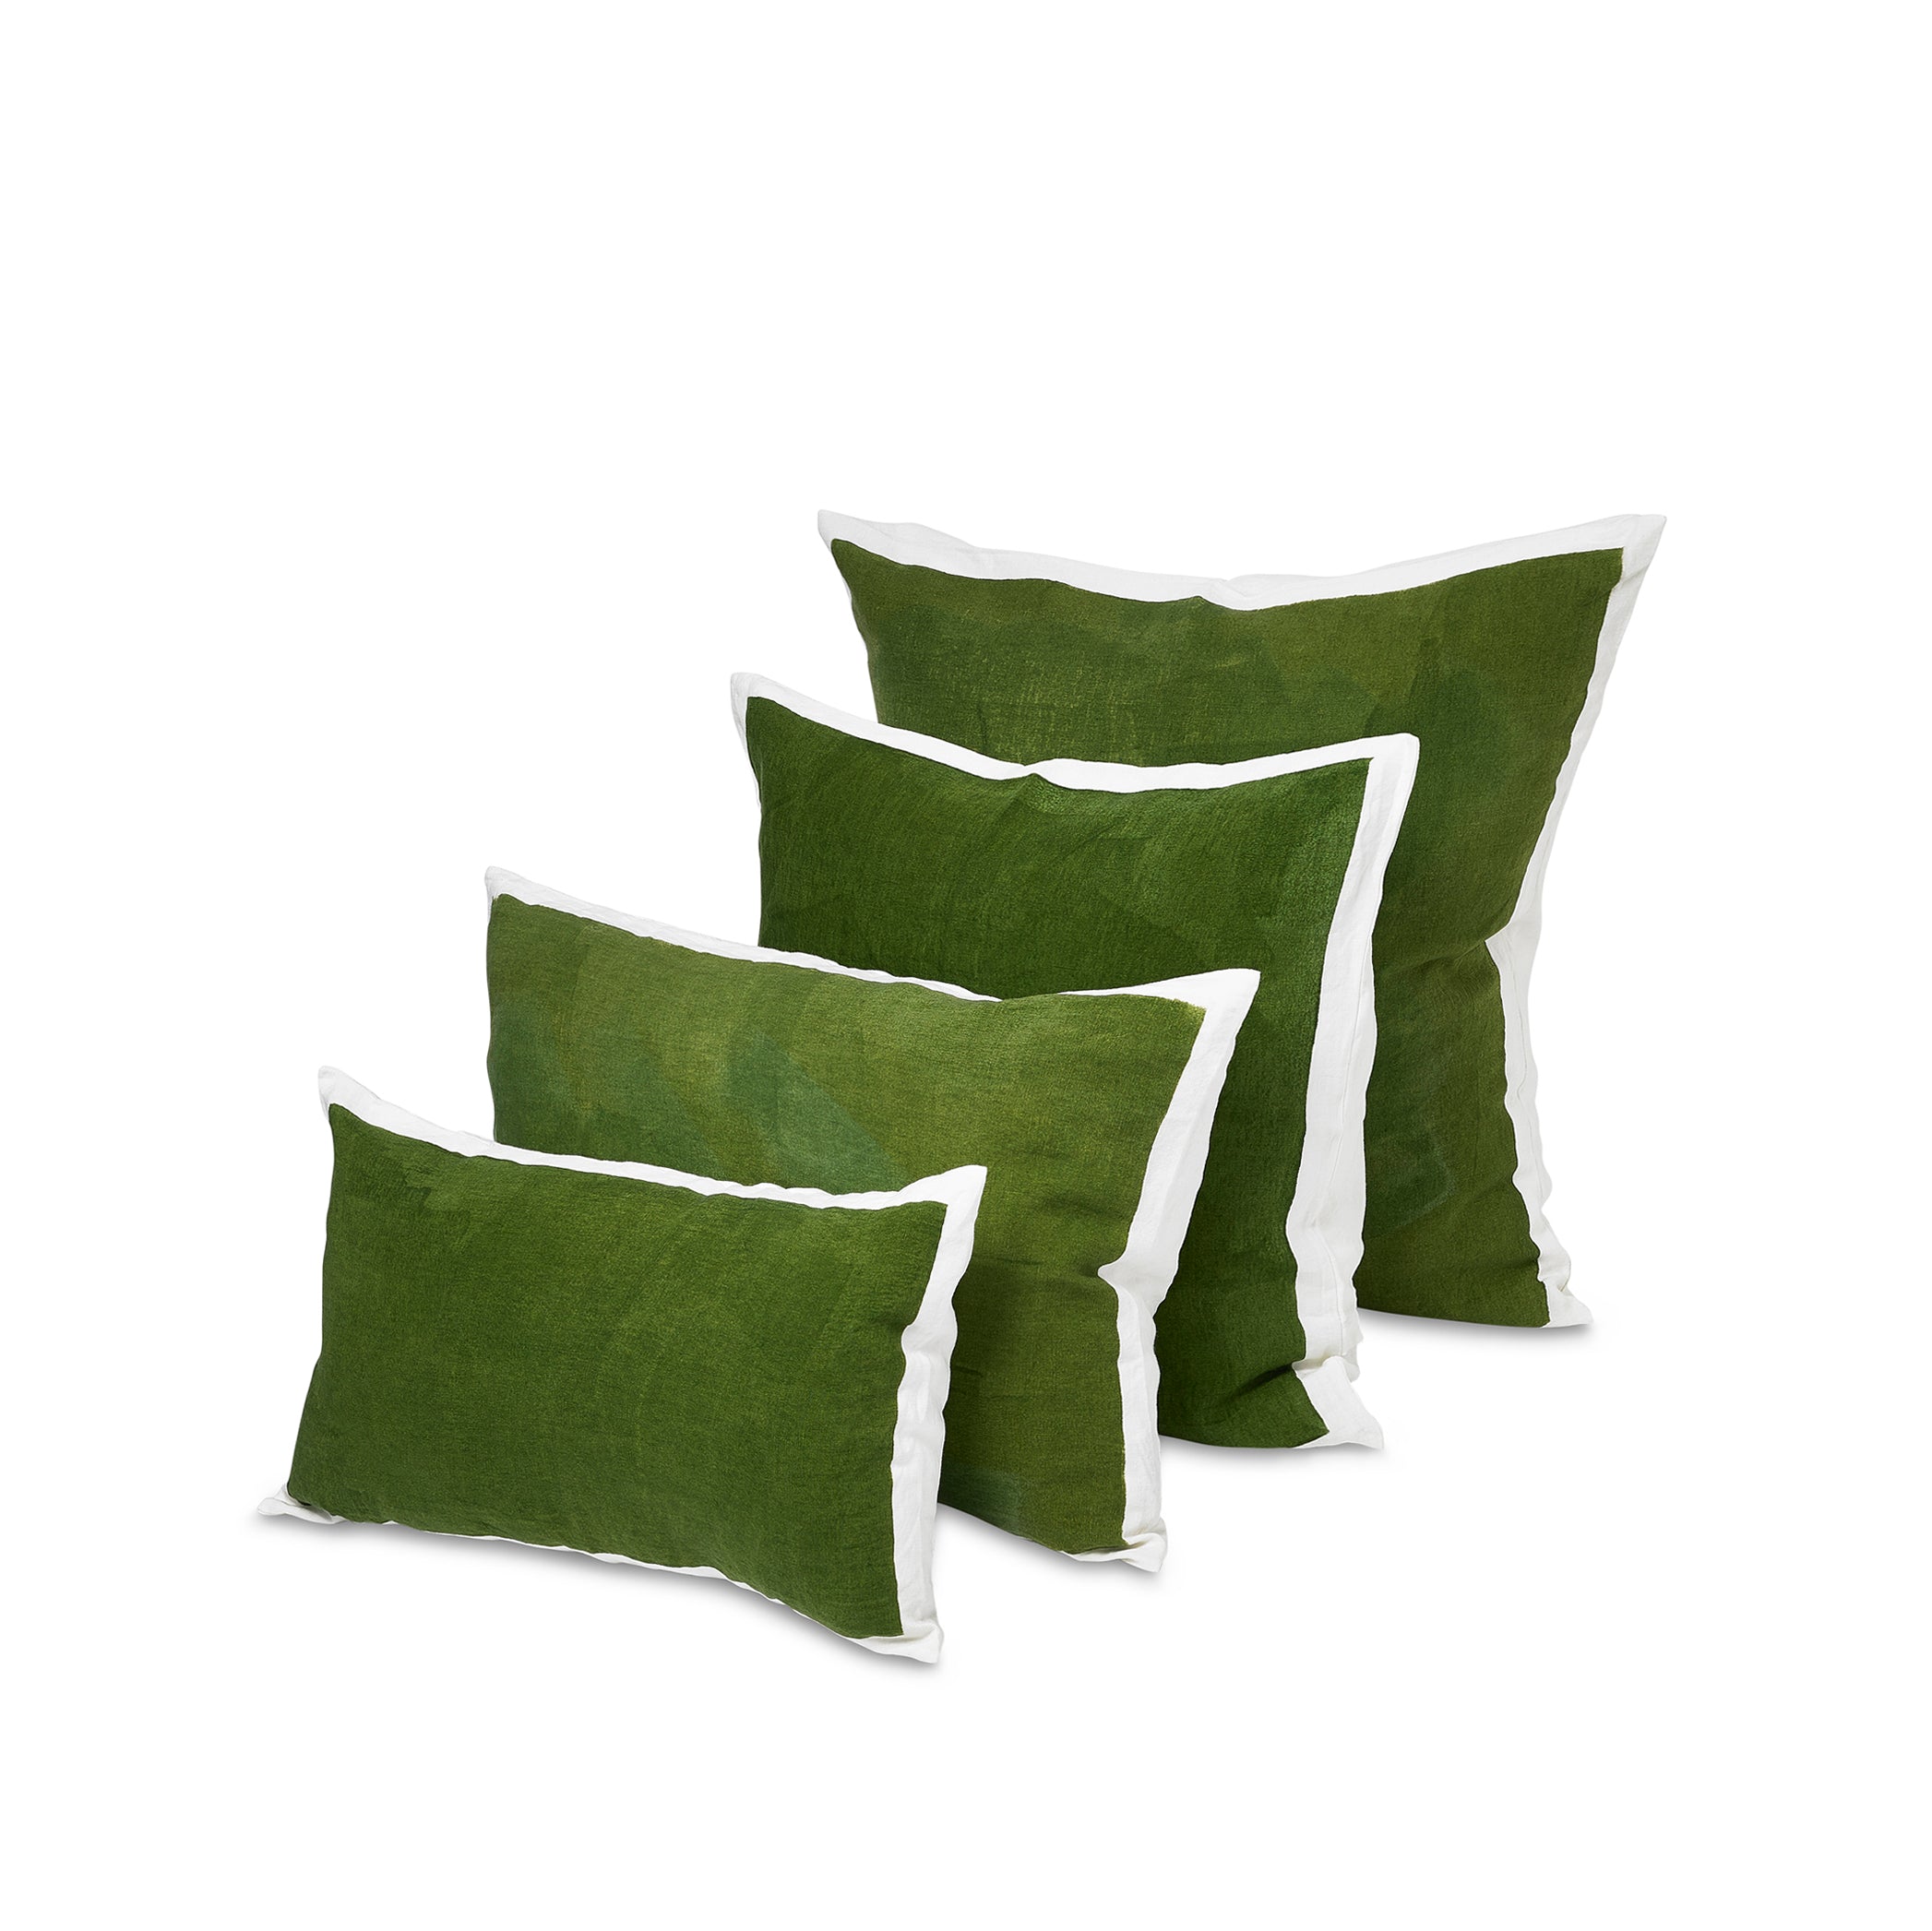 Hand Painted Linen Cushion in Avocado Green, 50cm x 30cm